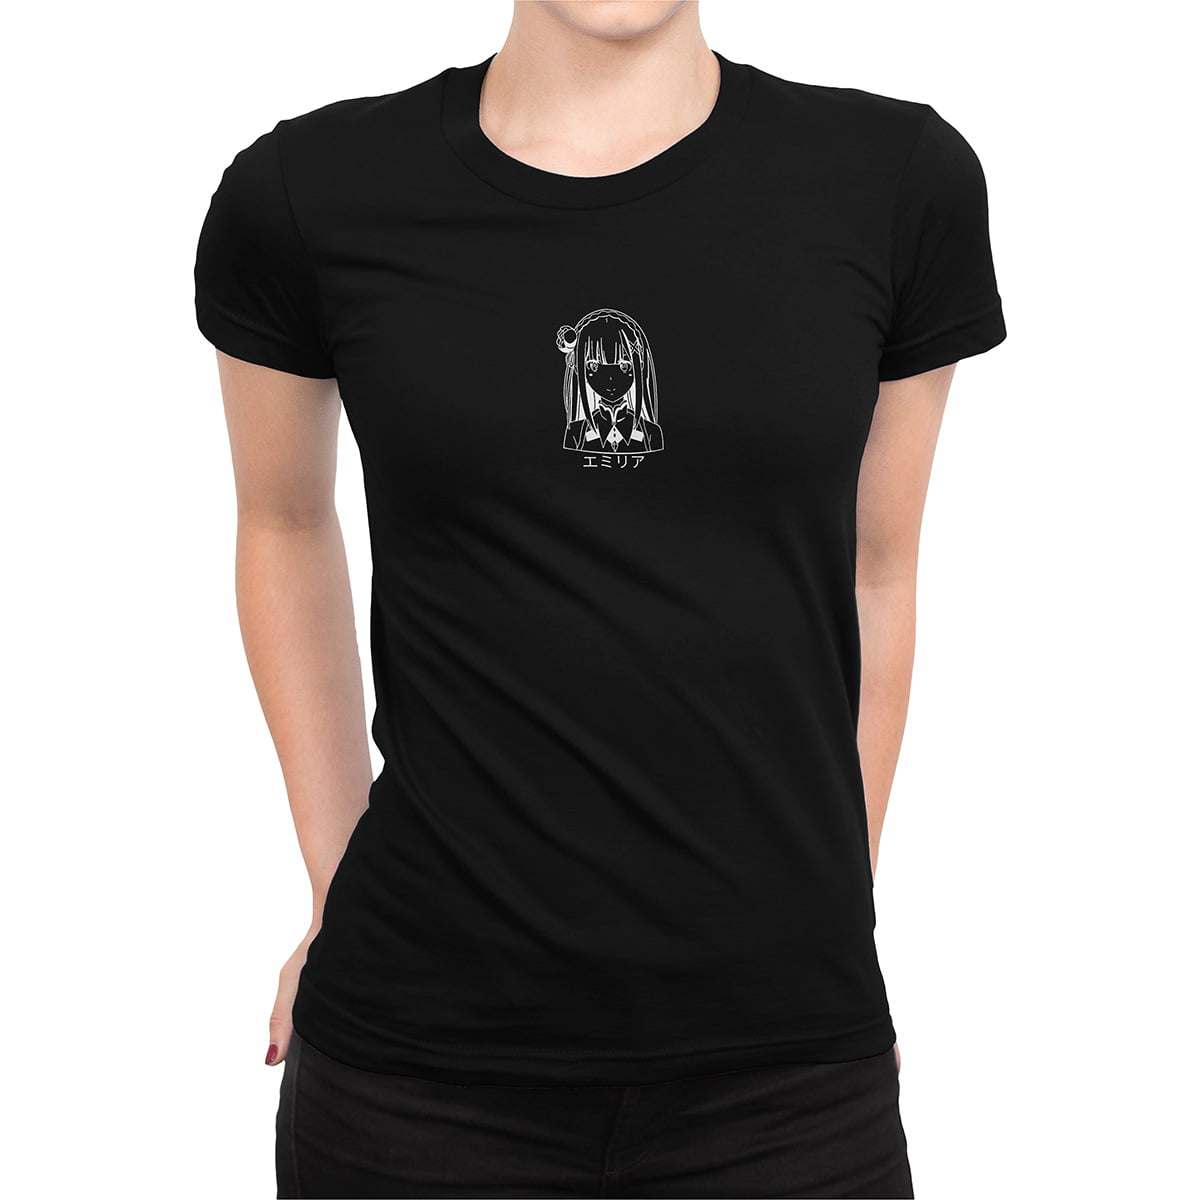 ReZero Emilia Beyaz FXSCA2114C Kadin Tshirt Siyah Orta Kucuk - Re:Zero Emilia Kadın T-shirt - Figurex